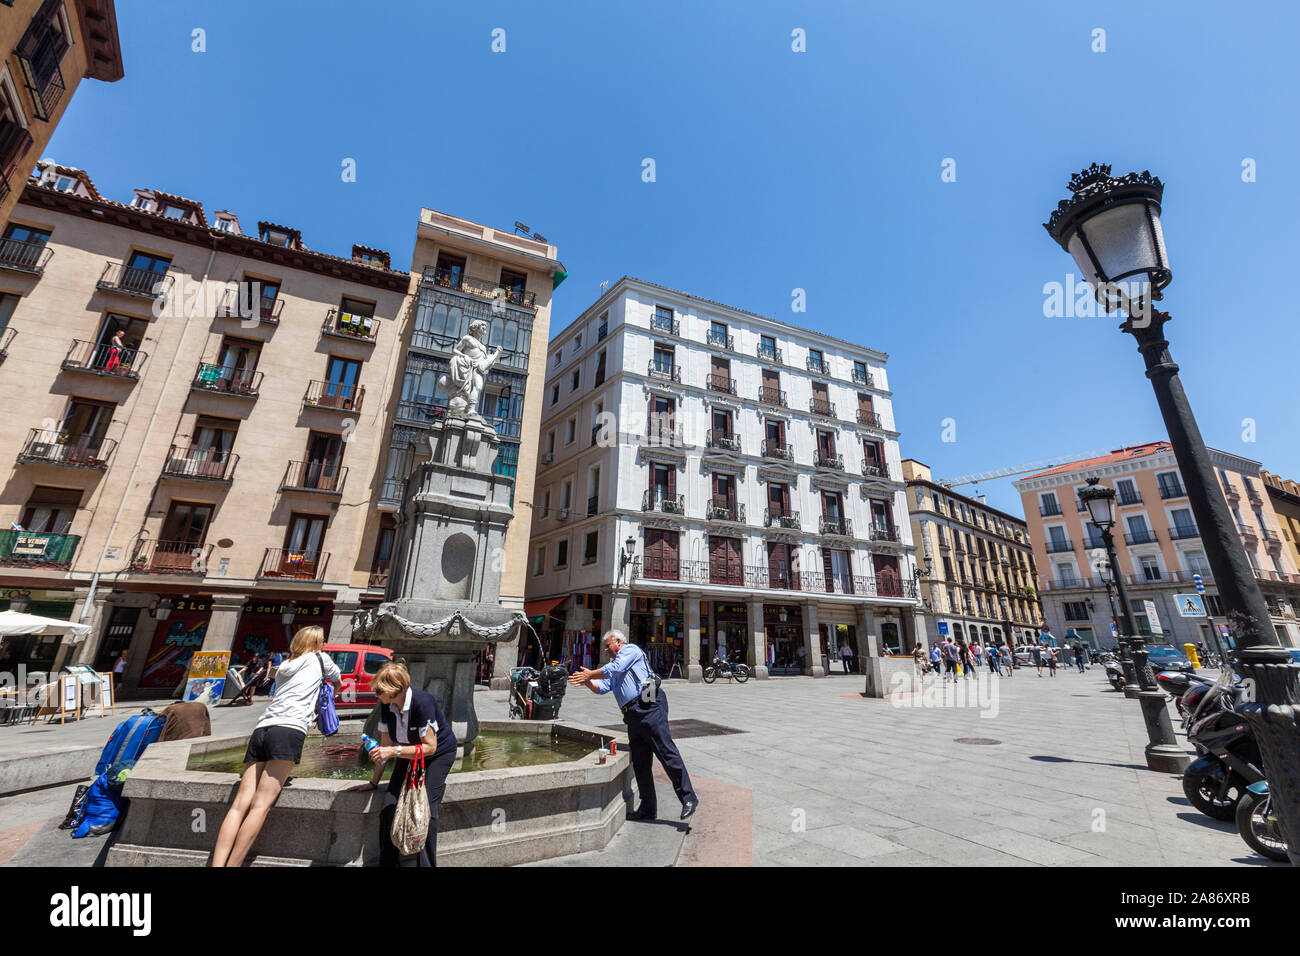 Plaza de la Provincia mit Menschen in Orfeo Brunnen, Reproduktion, Madrid, Spanien Stockfoto